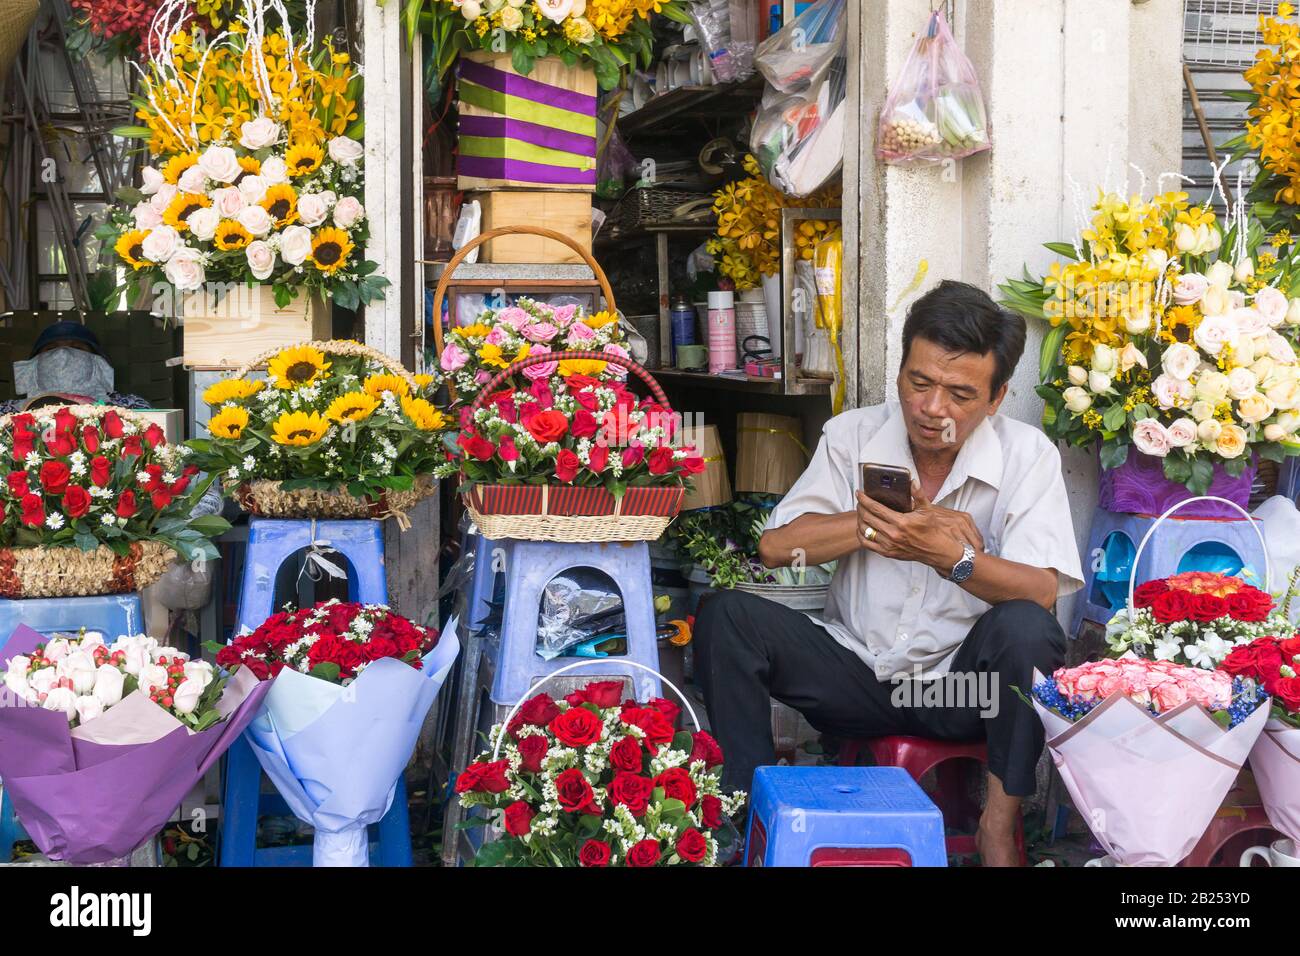 Saigon (Ho Chi Minh City) flower market - A Vietnamese man selling flowers at Ben Thanh Market in Saigon, Vietnam, Southeast Asia. Stock Photo